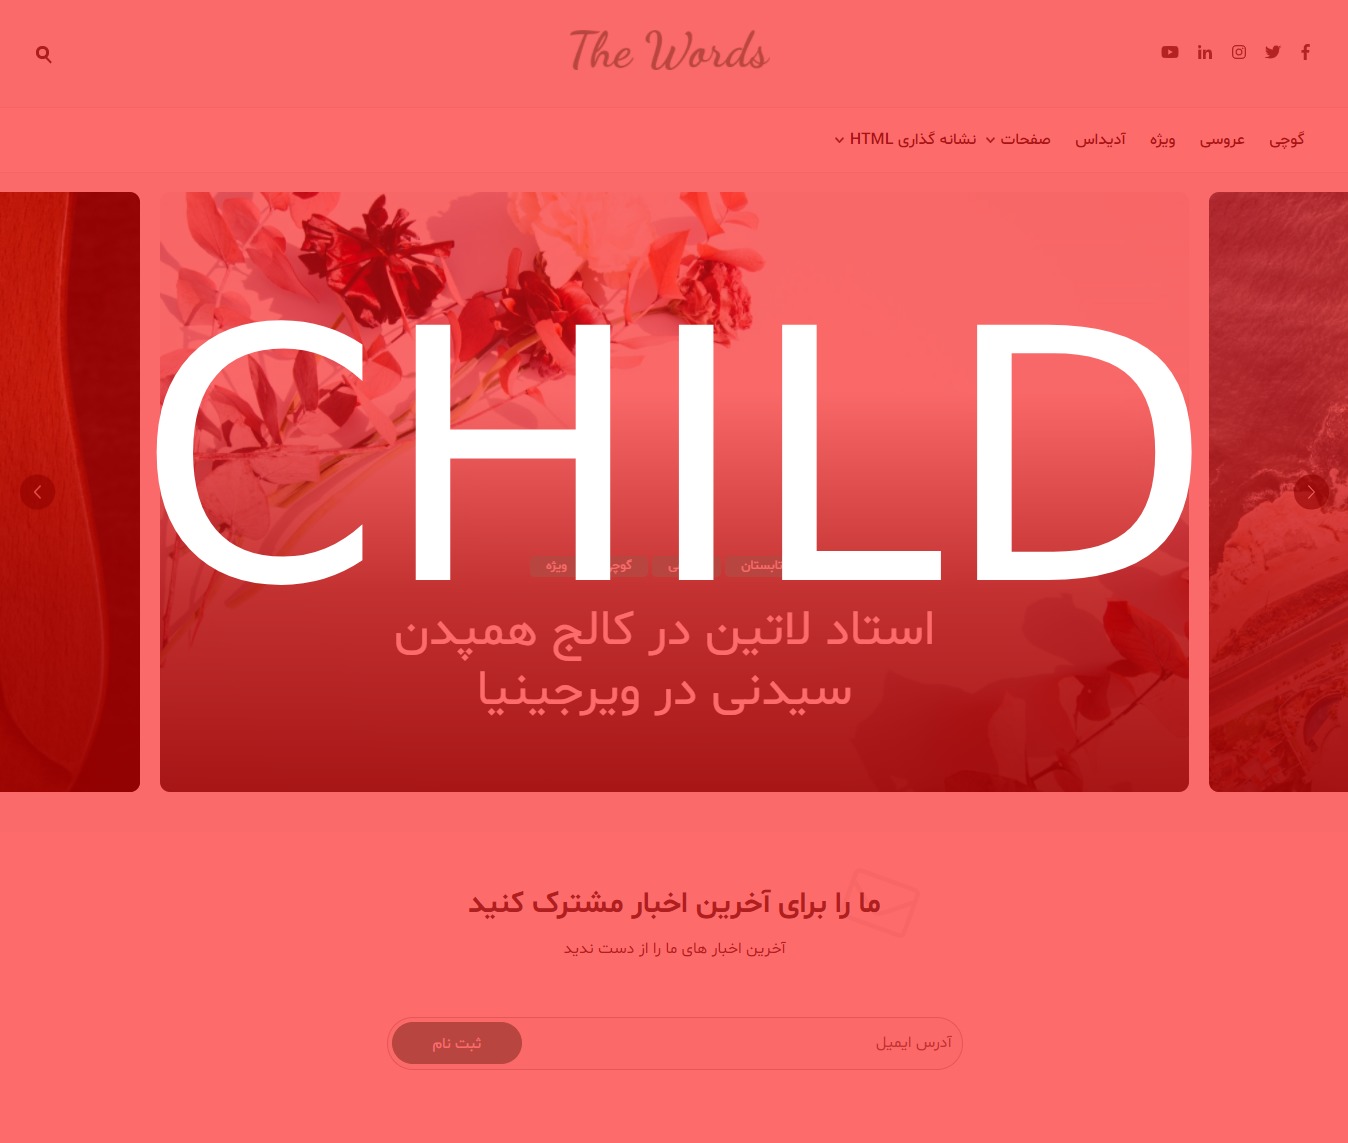 the-words-child-wordpress-blog-theme-qshkr-o.jpg